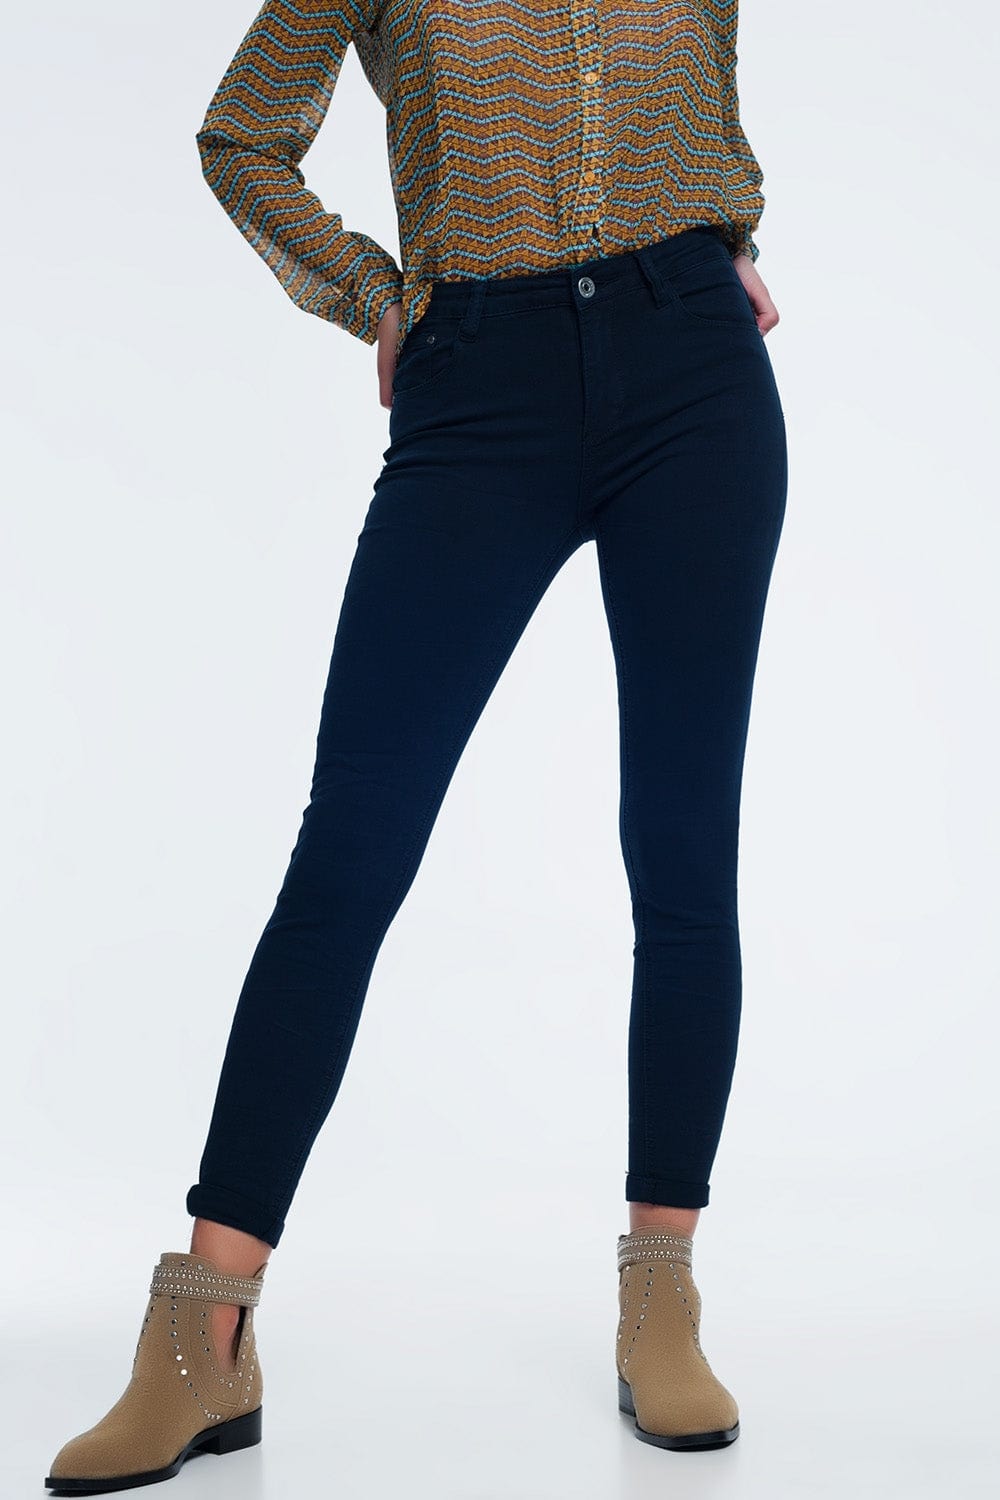 Q2 Women's Jean High Waist Skinny Jeans in Navy